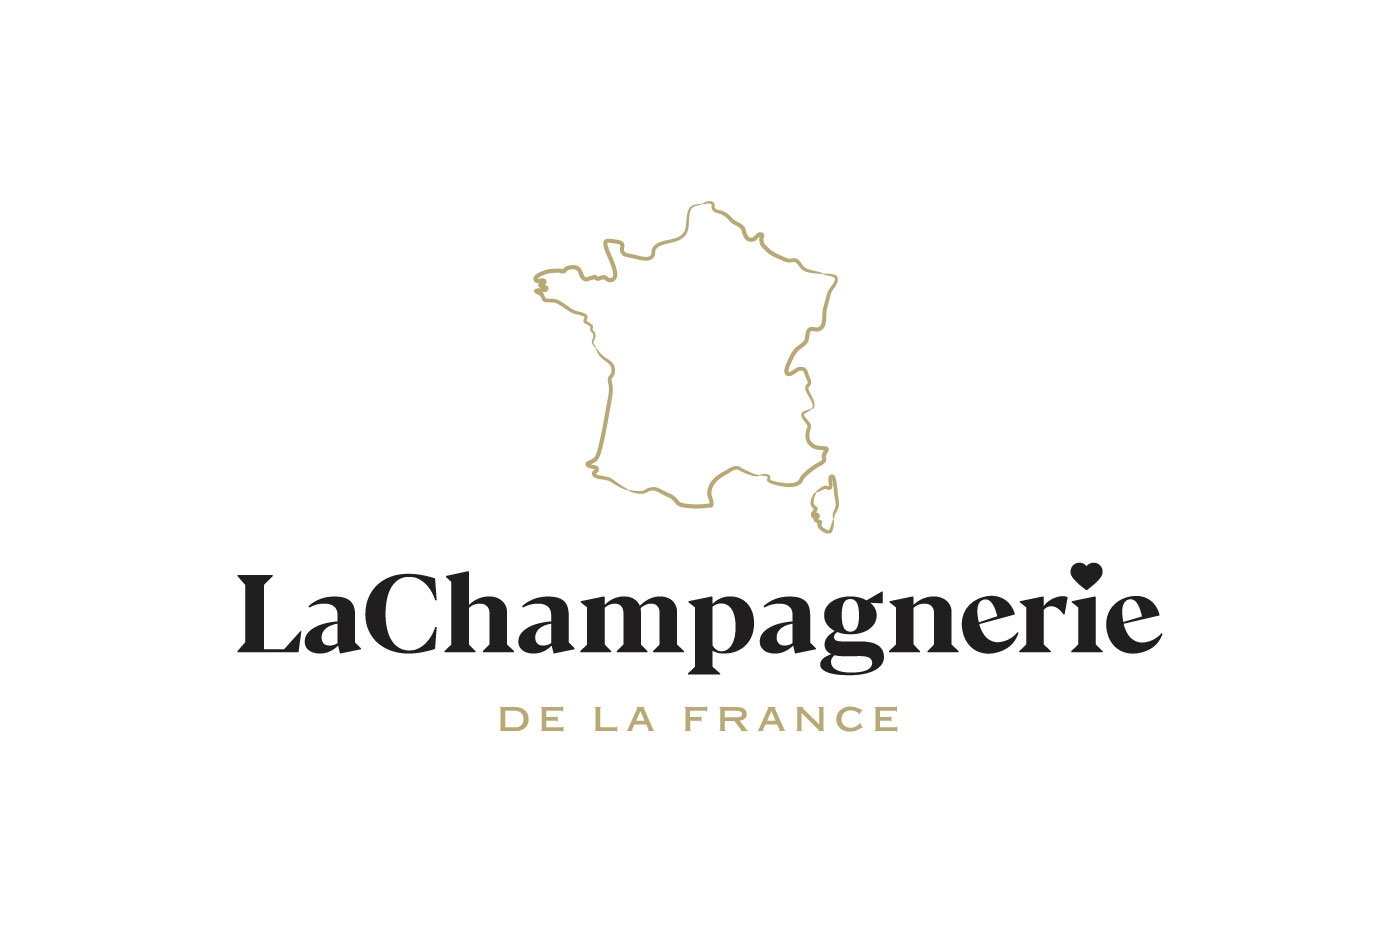 La champagnerie diseno planteamiento logo simbolo